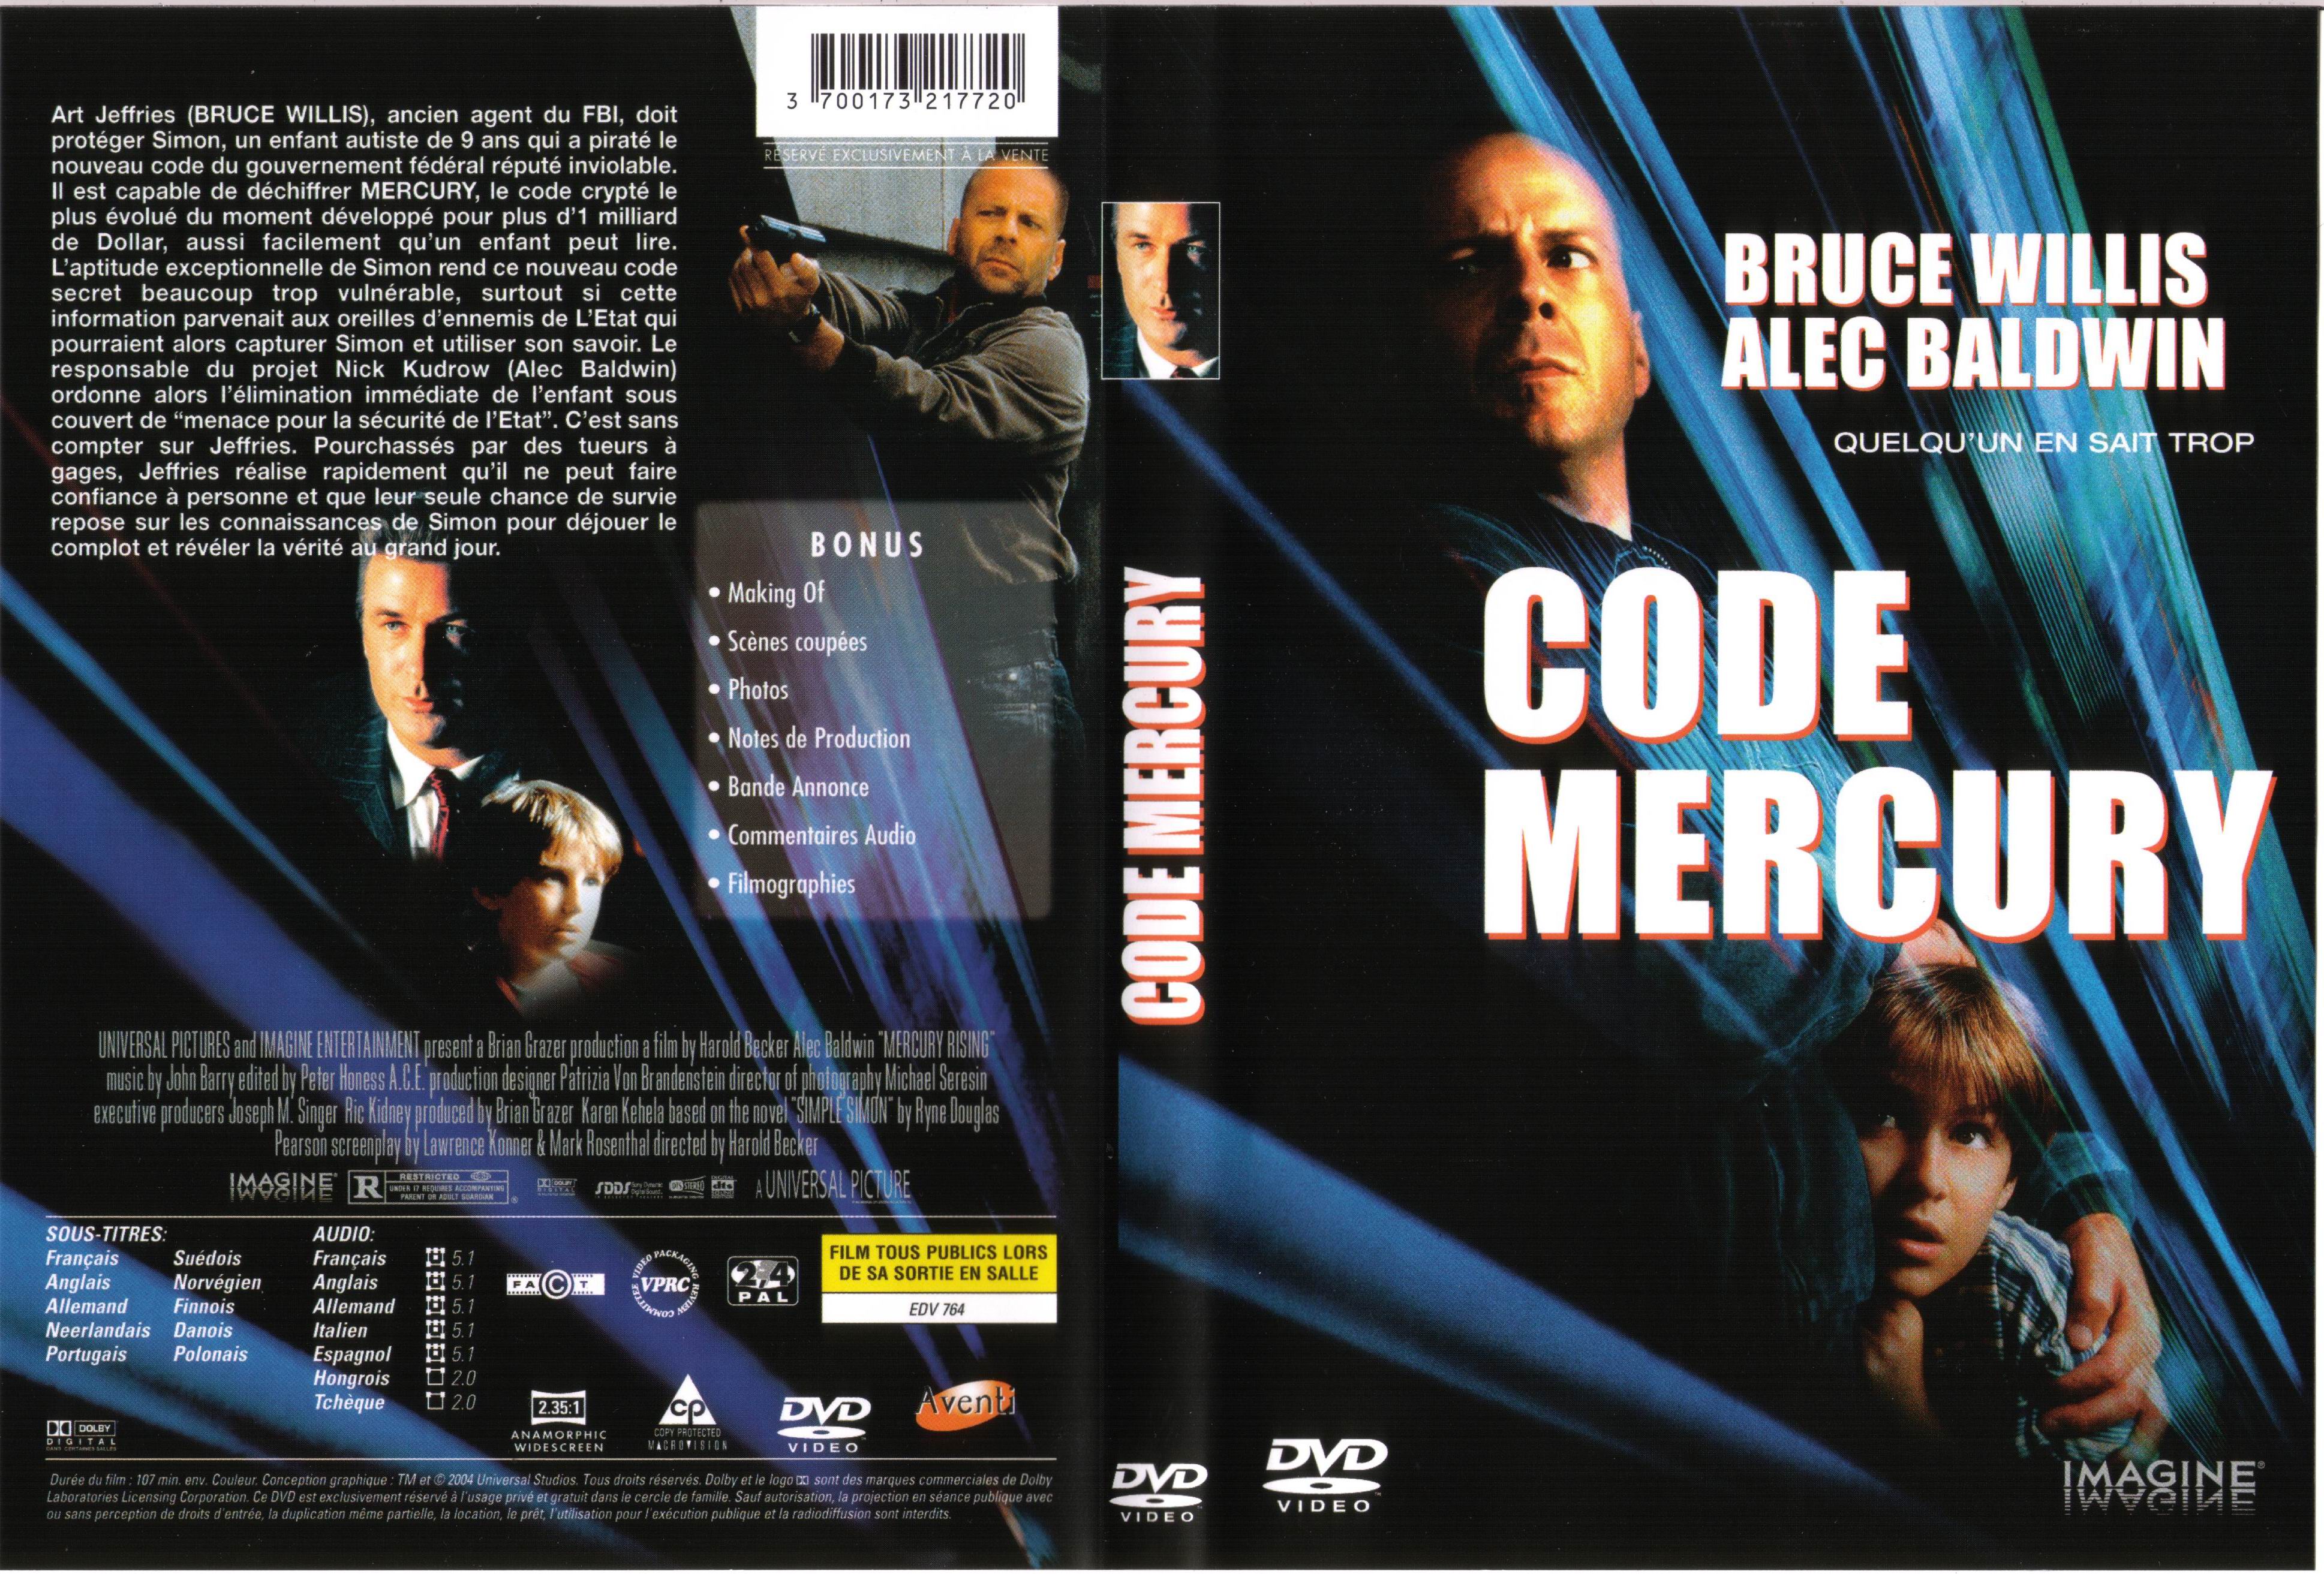 Jaquette DVD Code mercury